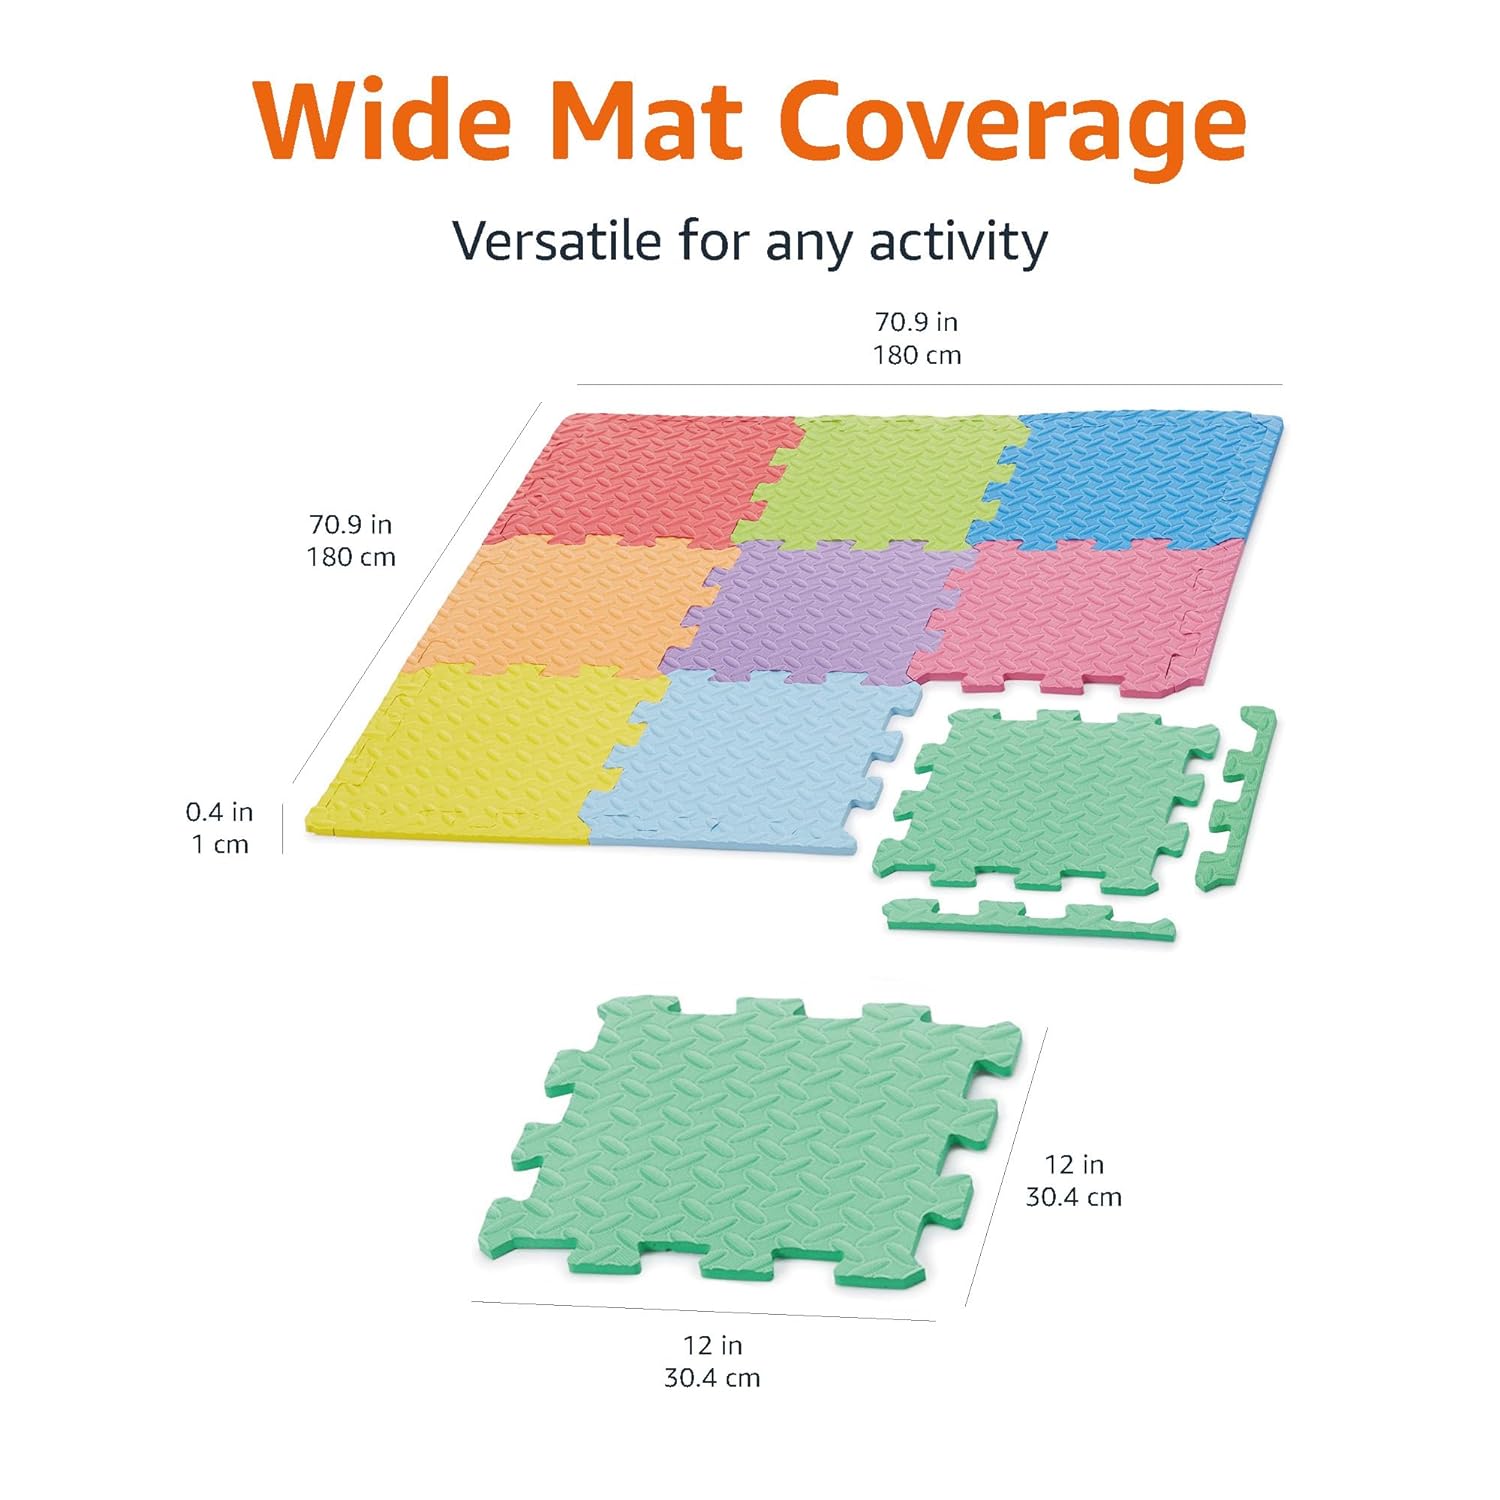 Kids Puzzle Exercise Interlocking Play Mat Eva Foam 36 Tiles 12x12 54 Borders By PAIDU